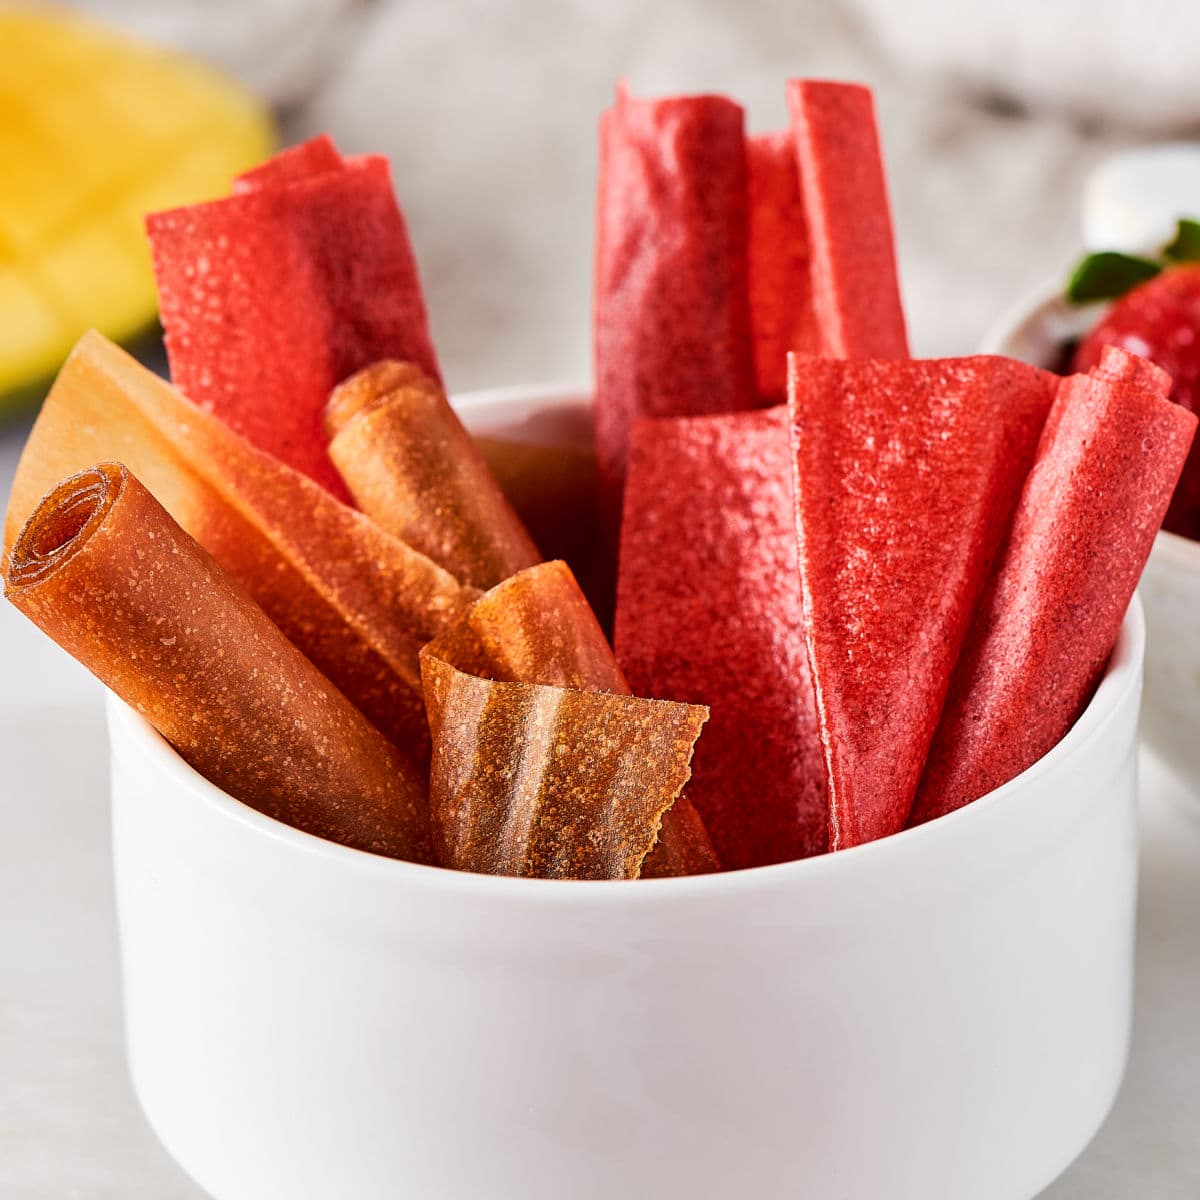 Healthy Fruit Snacks Recipe  Sugar Free Strawberry Fruit Snacks